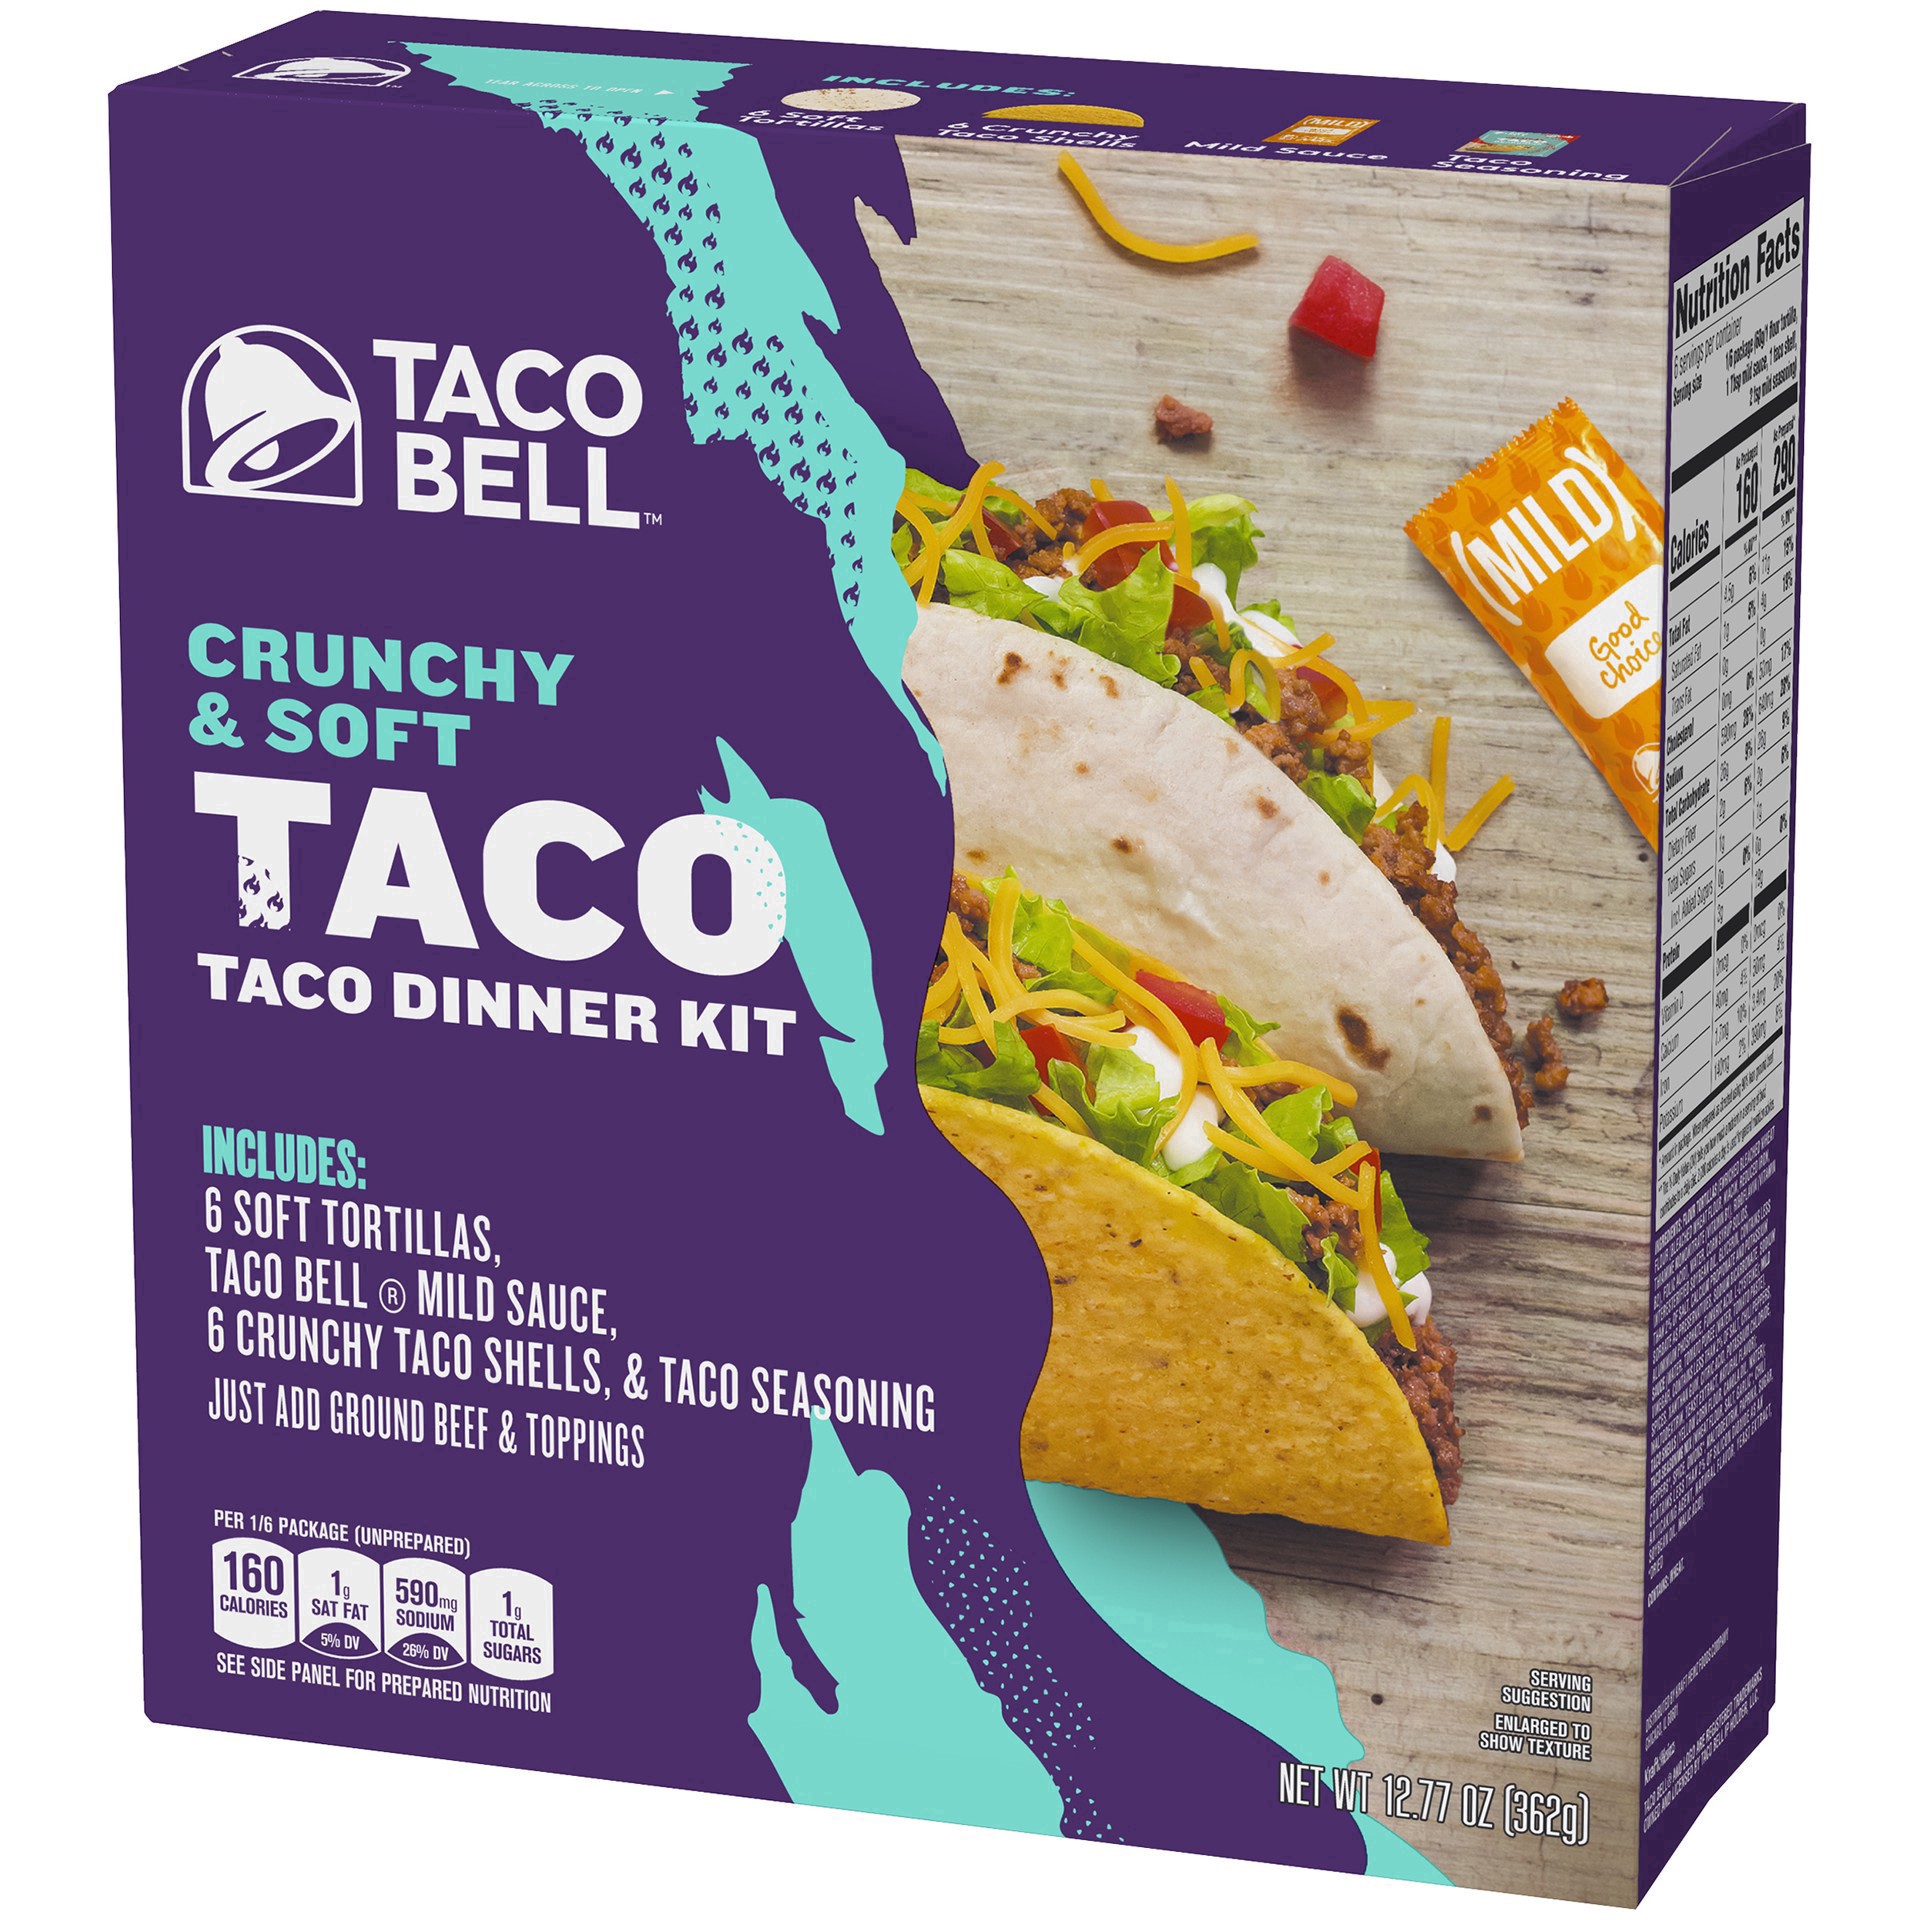 slide 85 of 101, Taco Bell Crunchy & Soft Taco Cravings Kit with 6 Soft Tortillas, 6 Crunchy Taco Shells, Taco Bell Mild Sauce & Seasoning, 12.77 oz Box, 1 ea